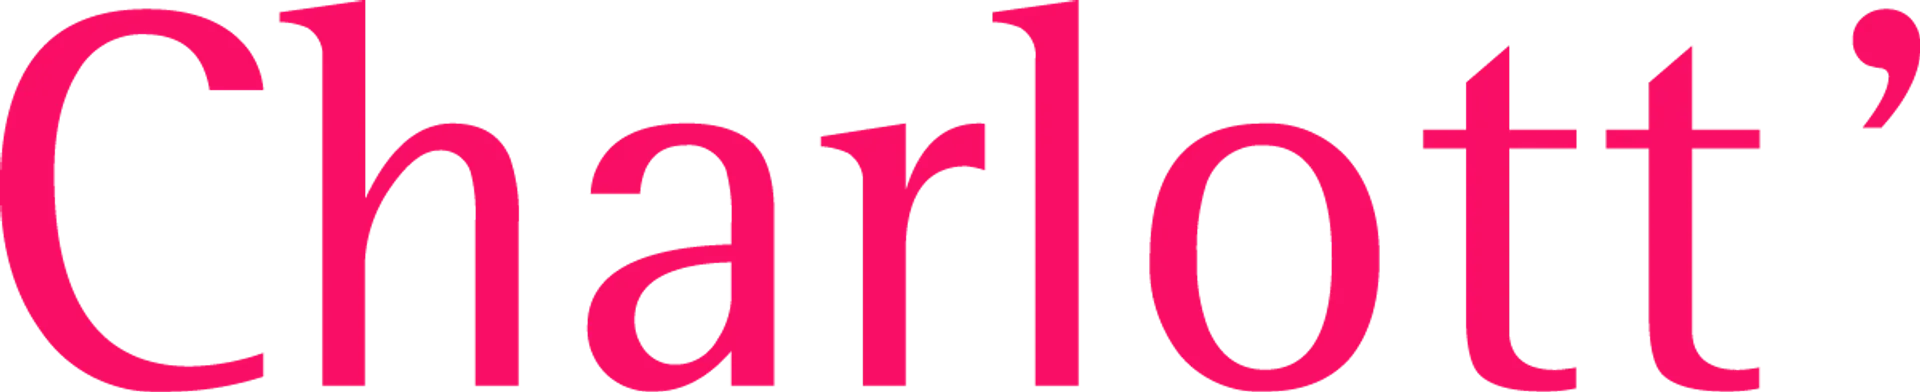 CHARLOTT logo